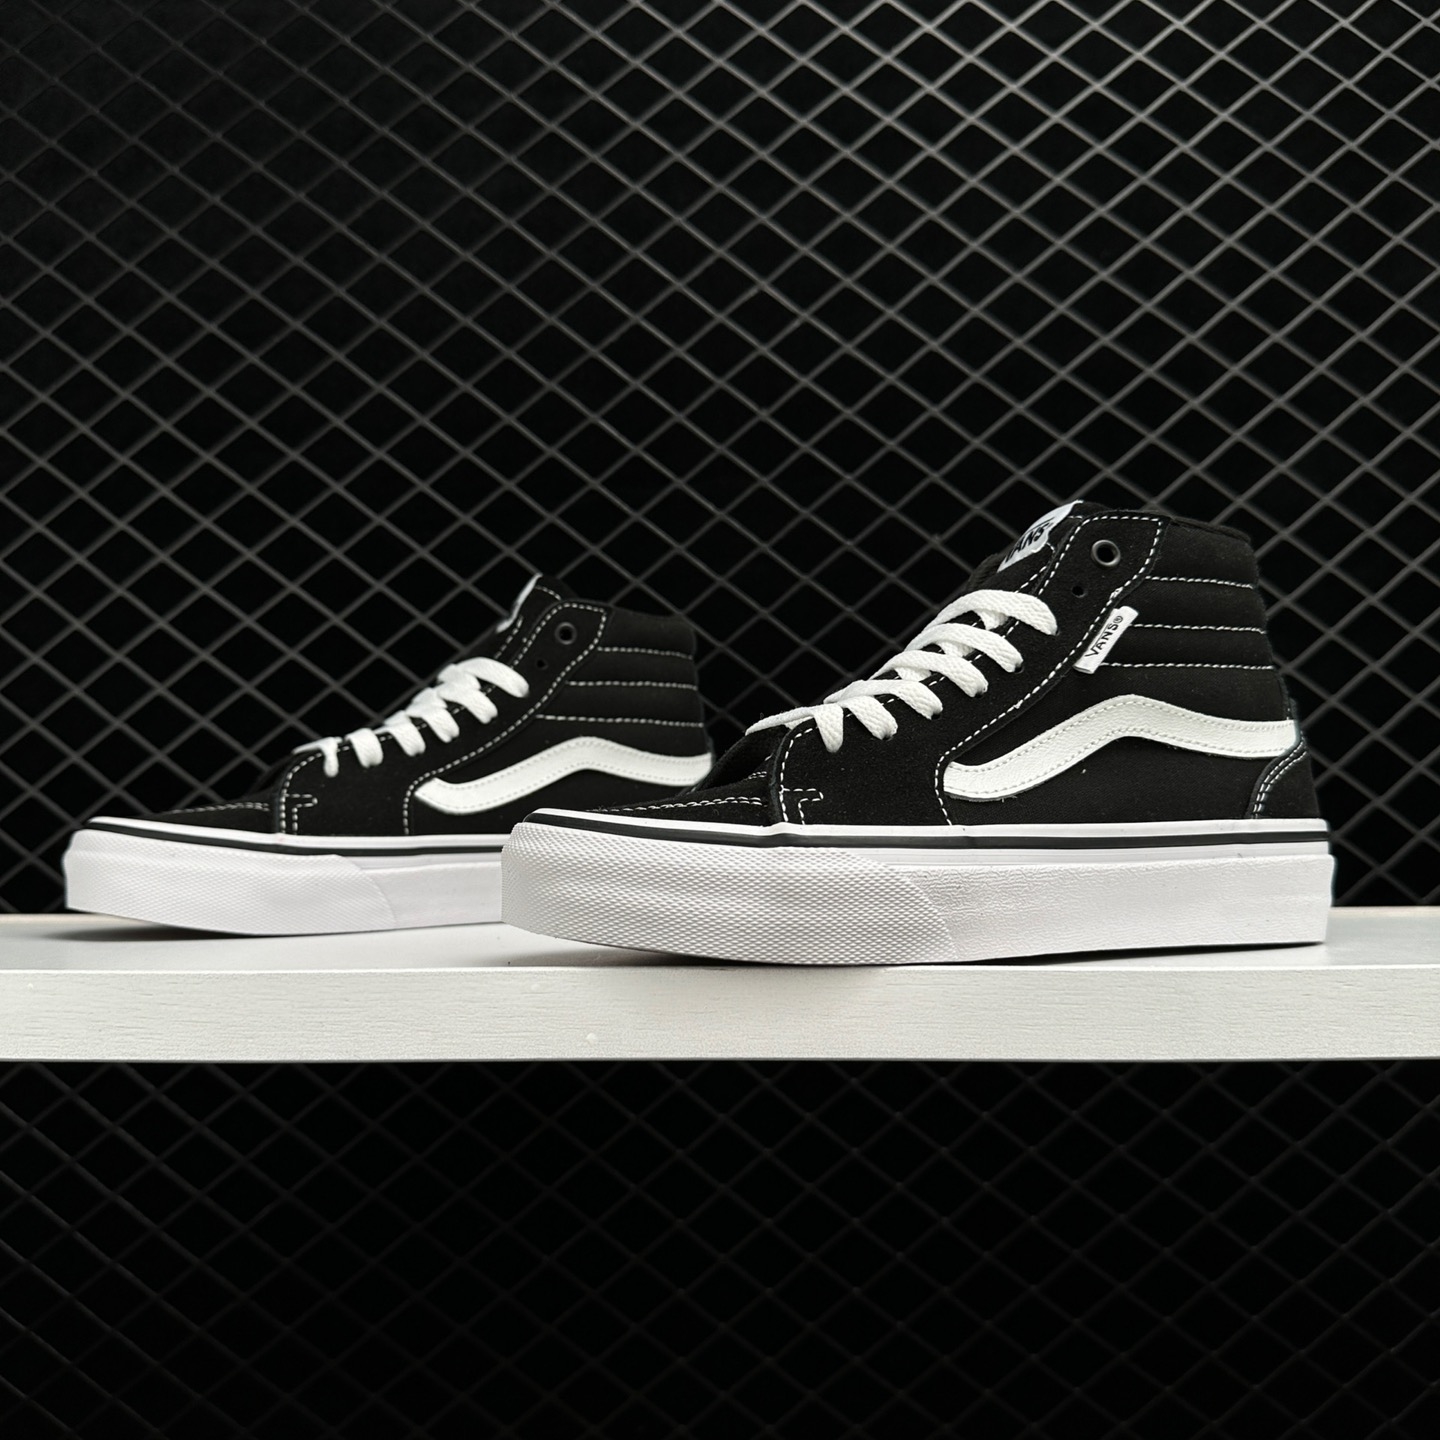 Vans Filmore Hi Platform Black White Skate Shoes - Stylish and Versatile Footwear